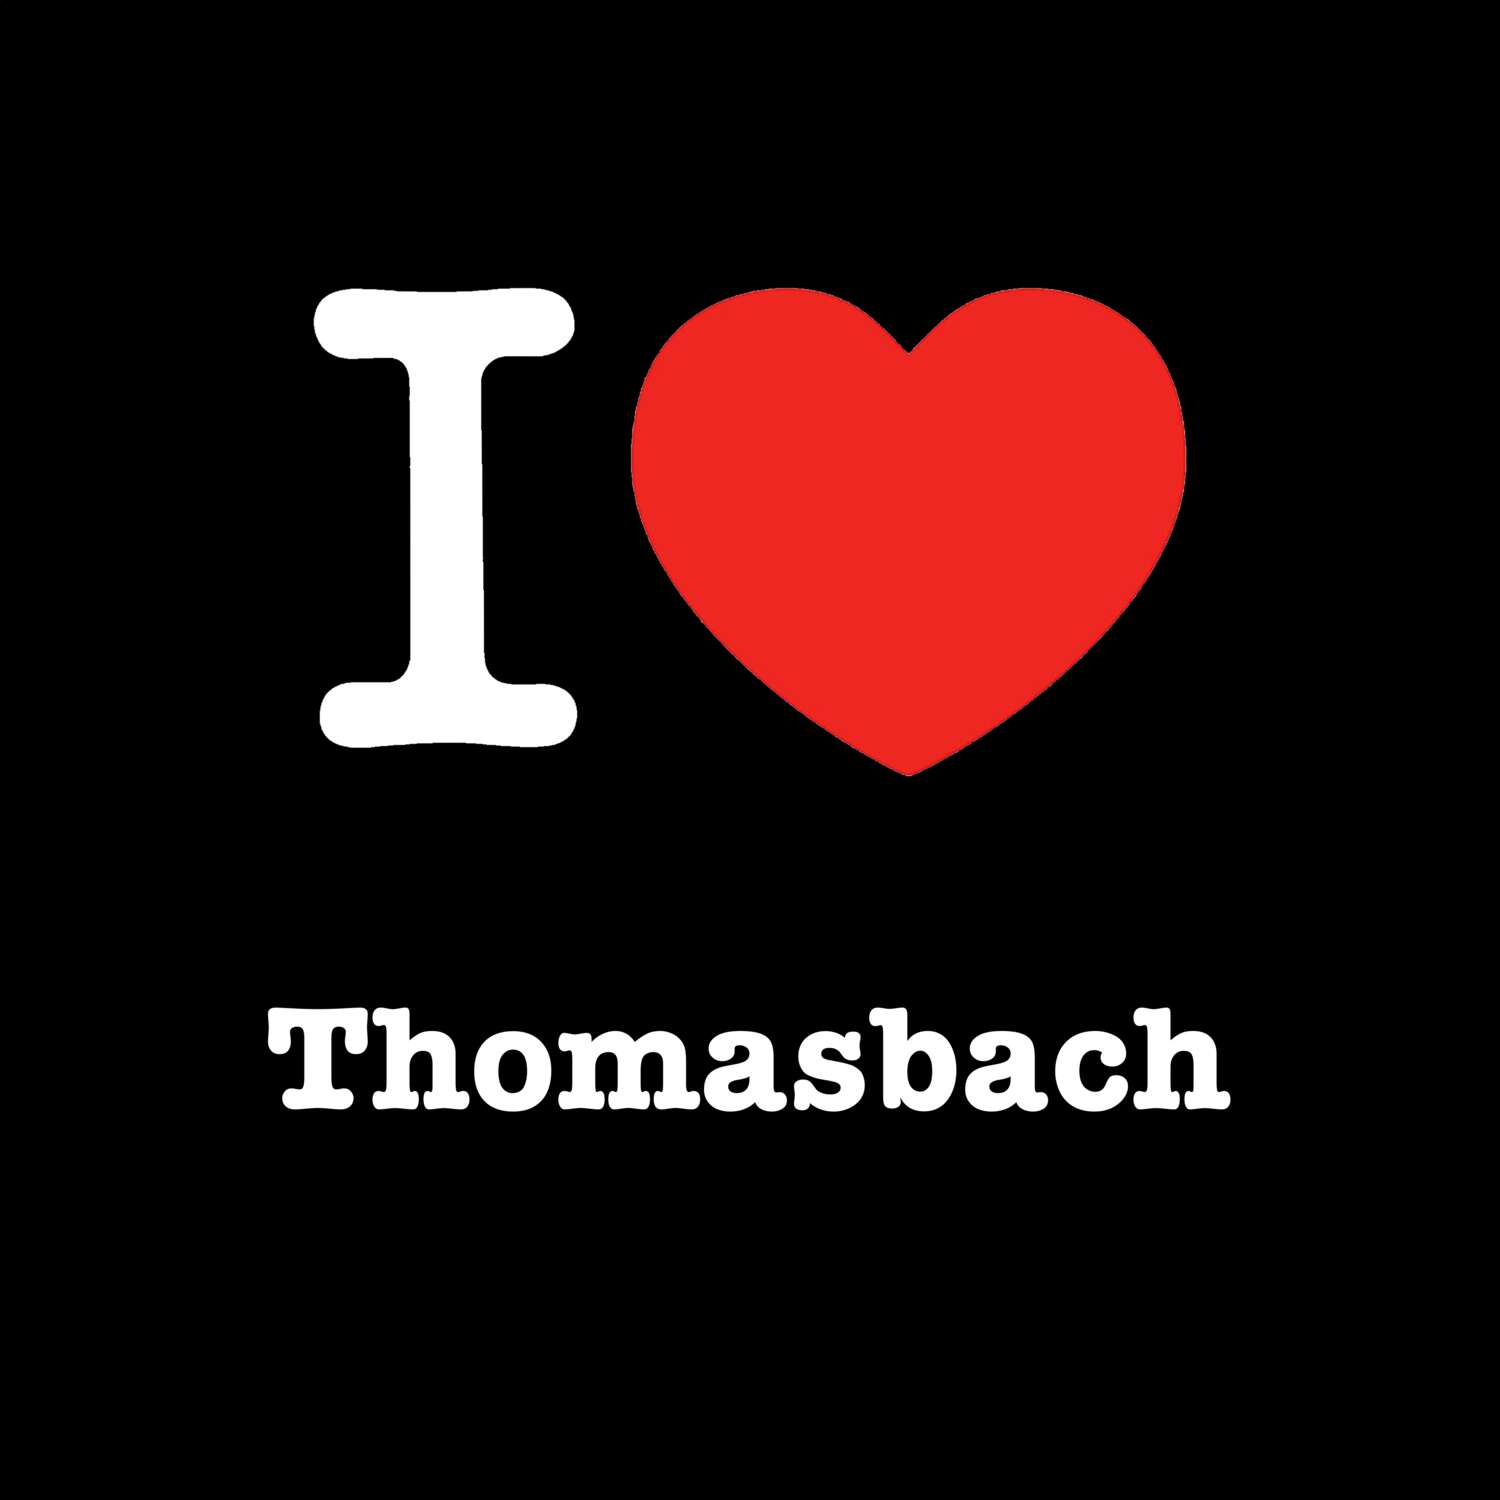 Thomasbach T-Shirt »I love«